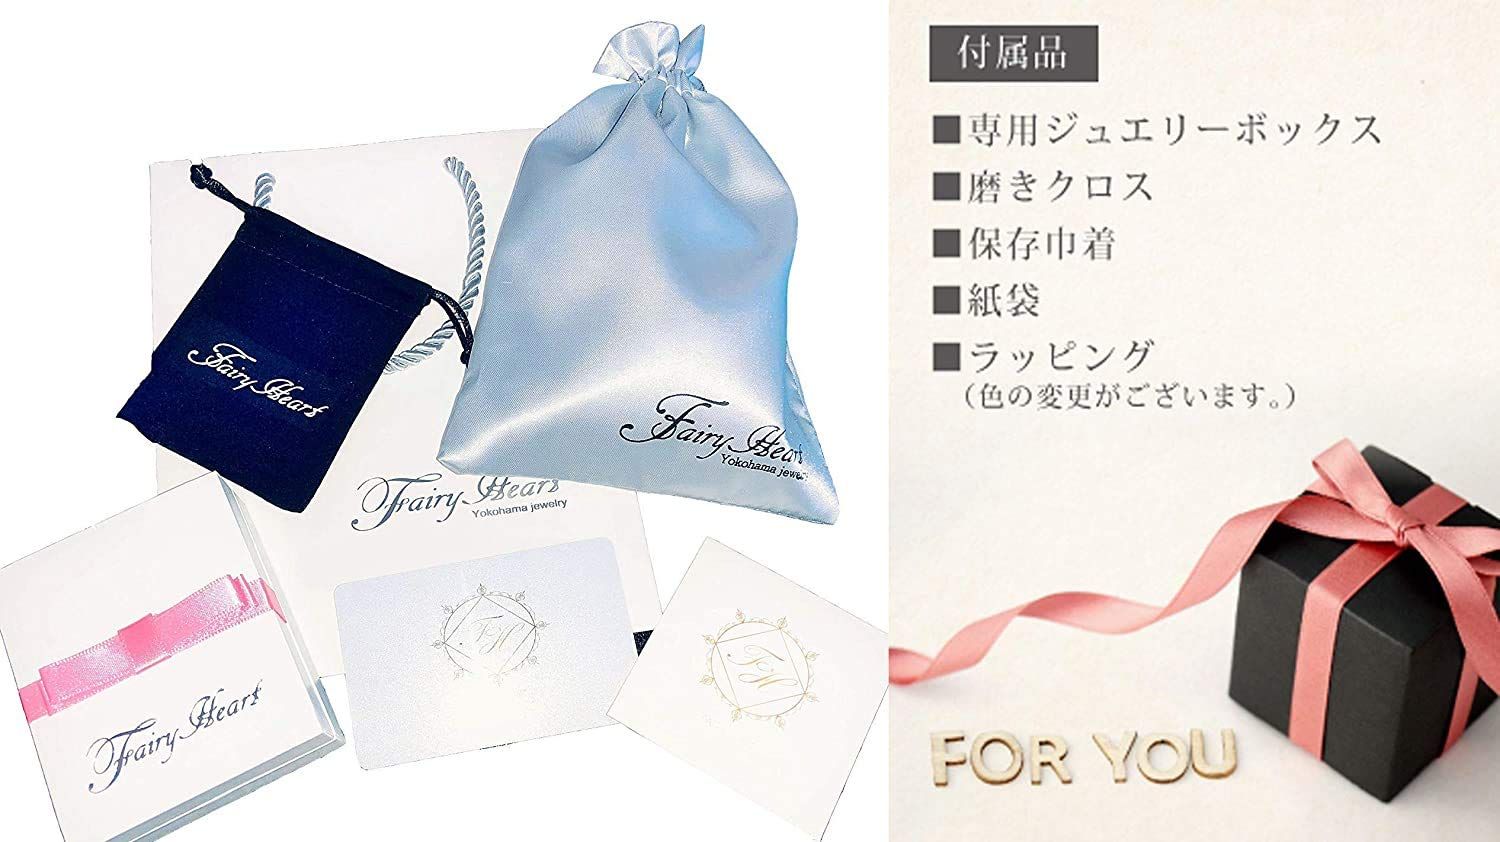 Fairy Heart Yokohama Jewelry] 1粒ネックレス レディース ネックレス